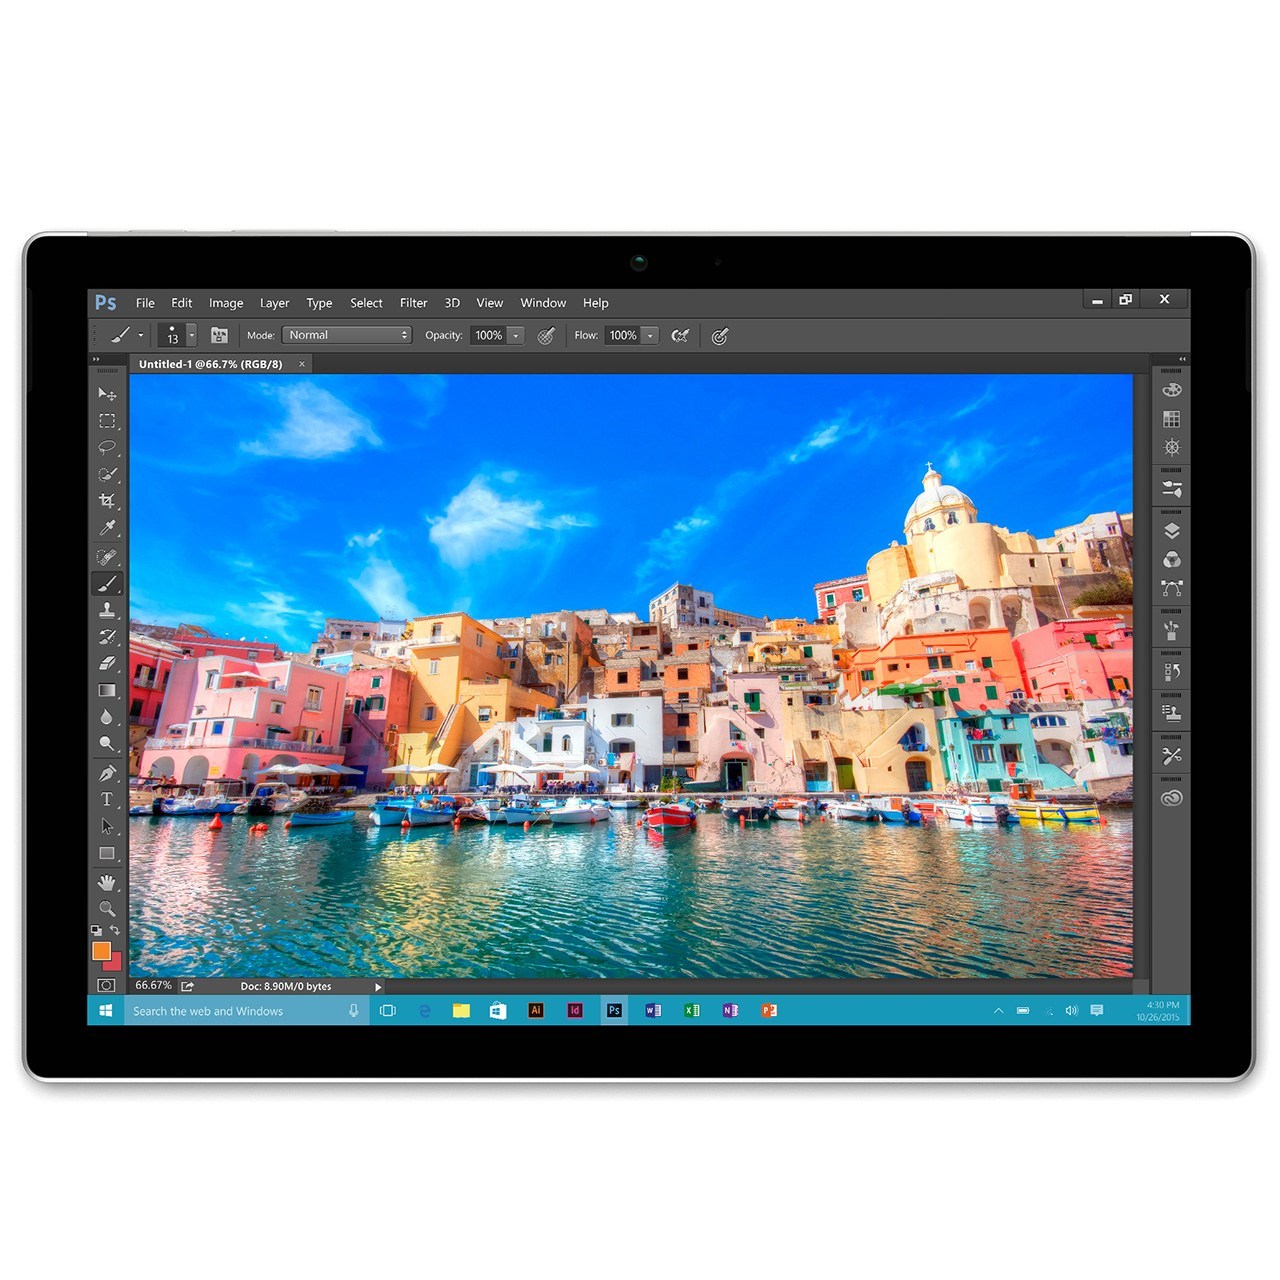 تبلت مایکروسافت مدل Surface Pro 4 - E به همراه کاور STM Dux